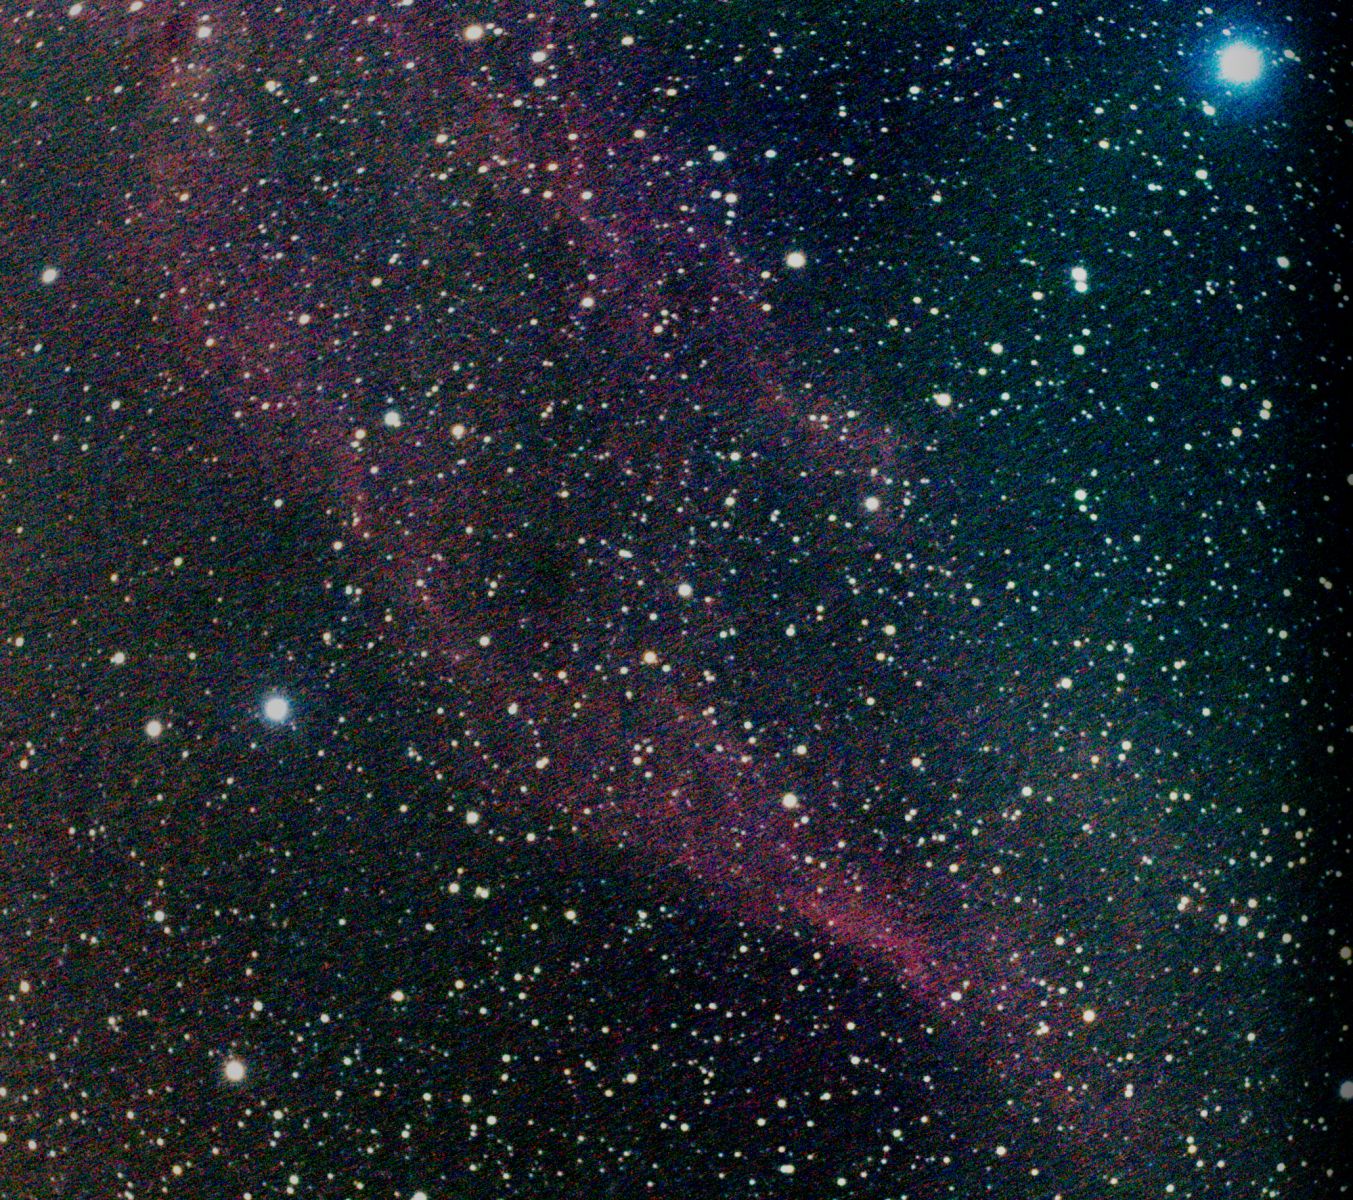 NGC 1499 California Nebula